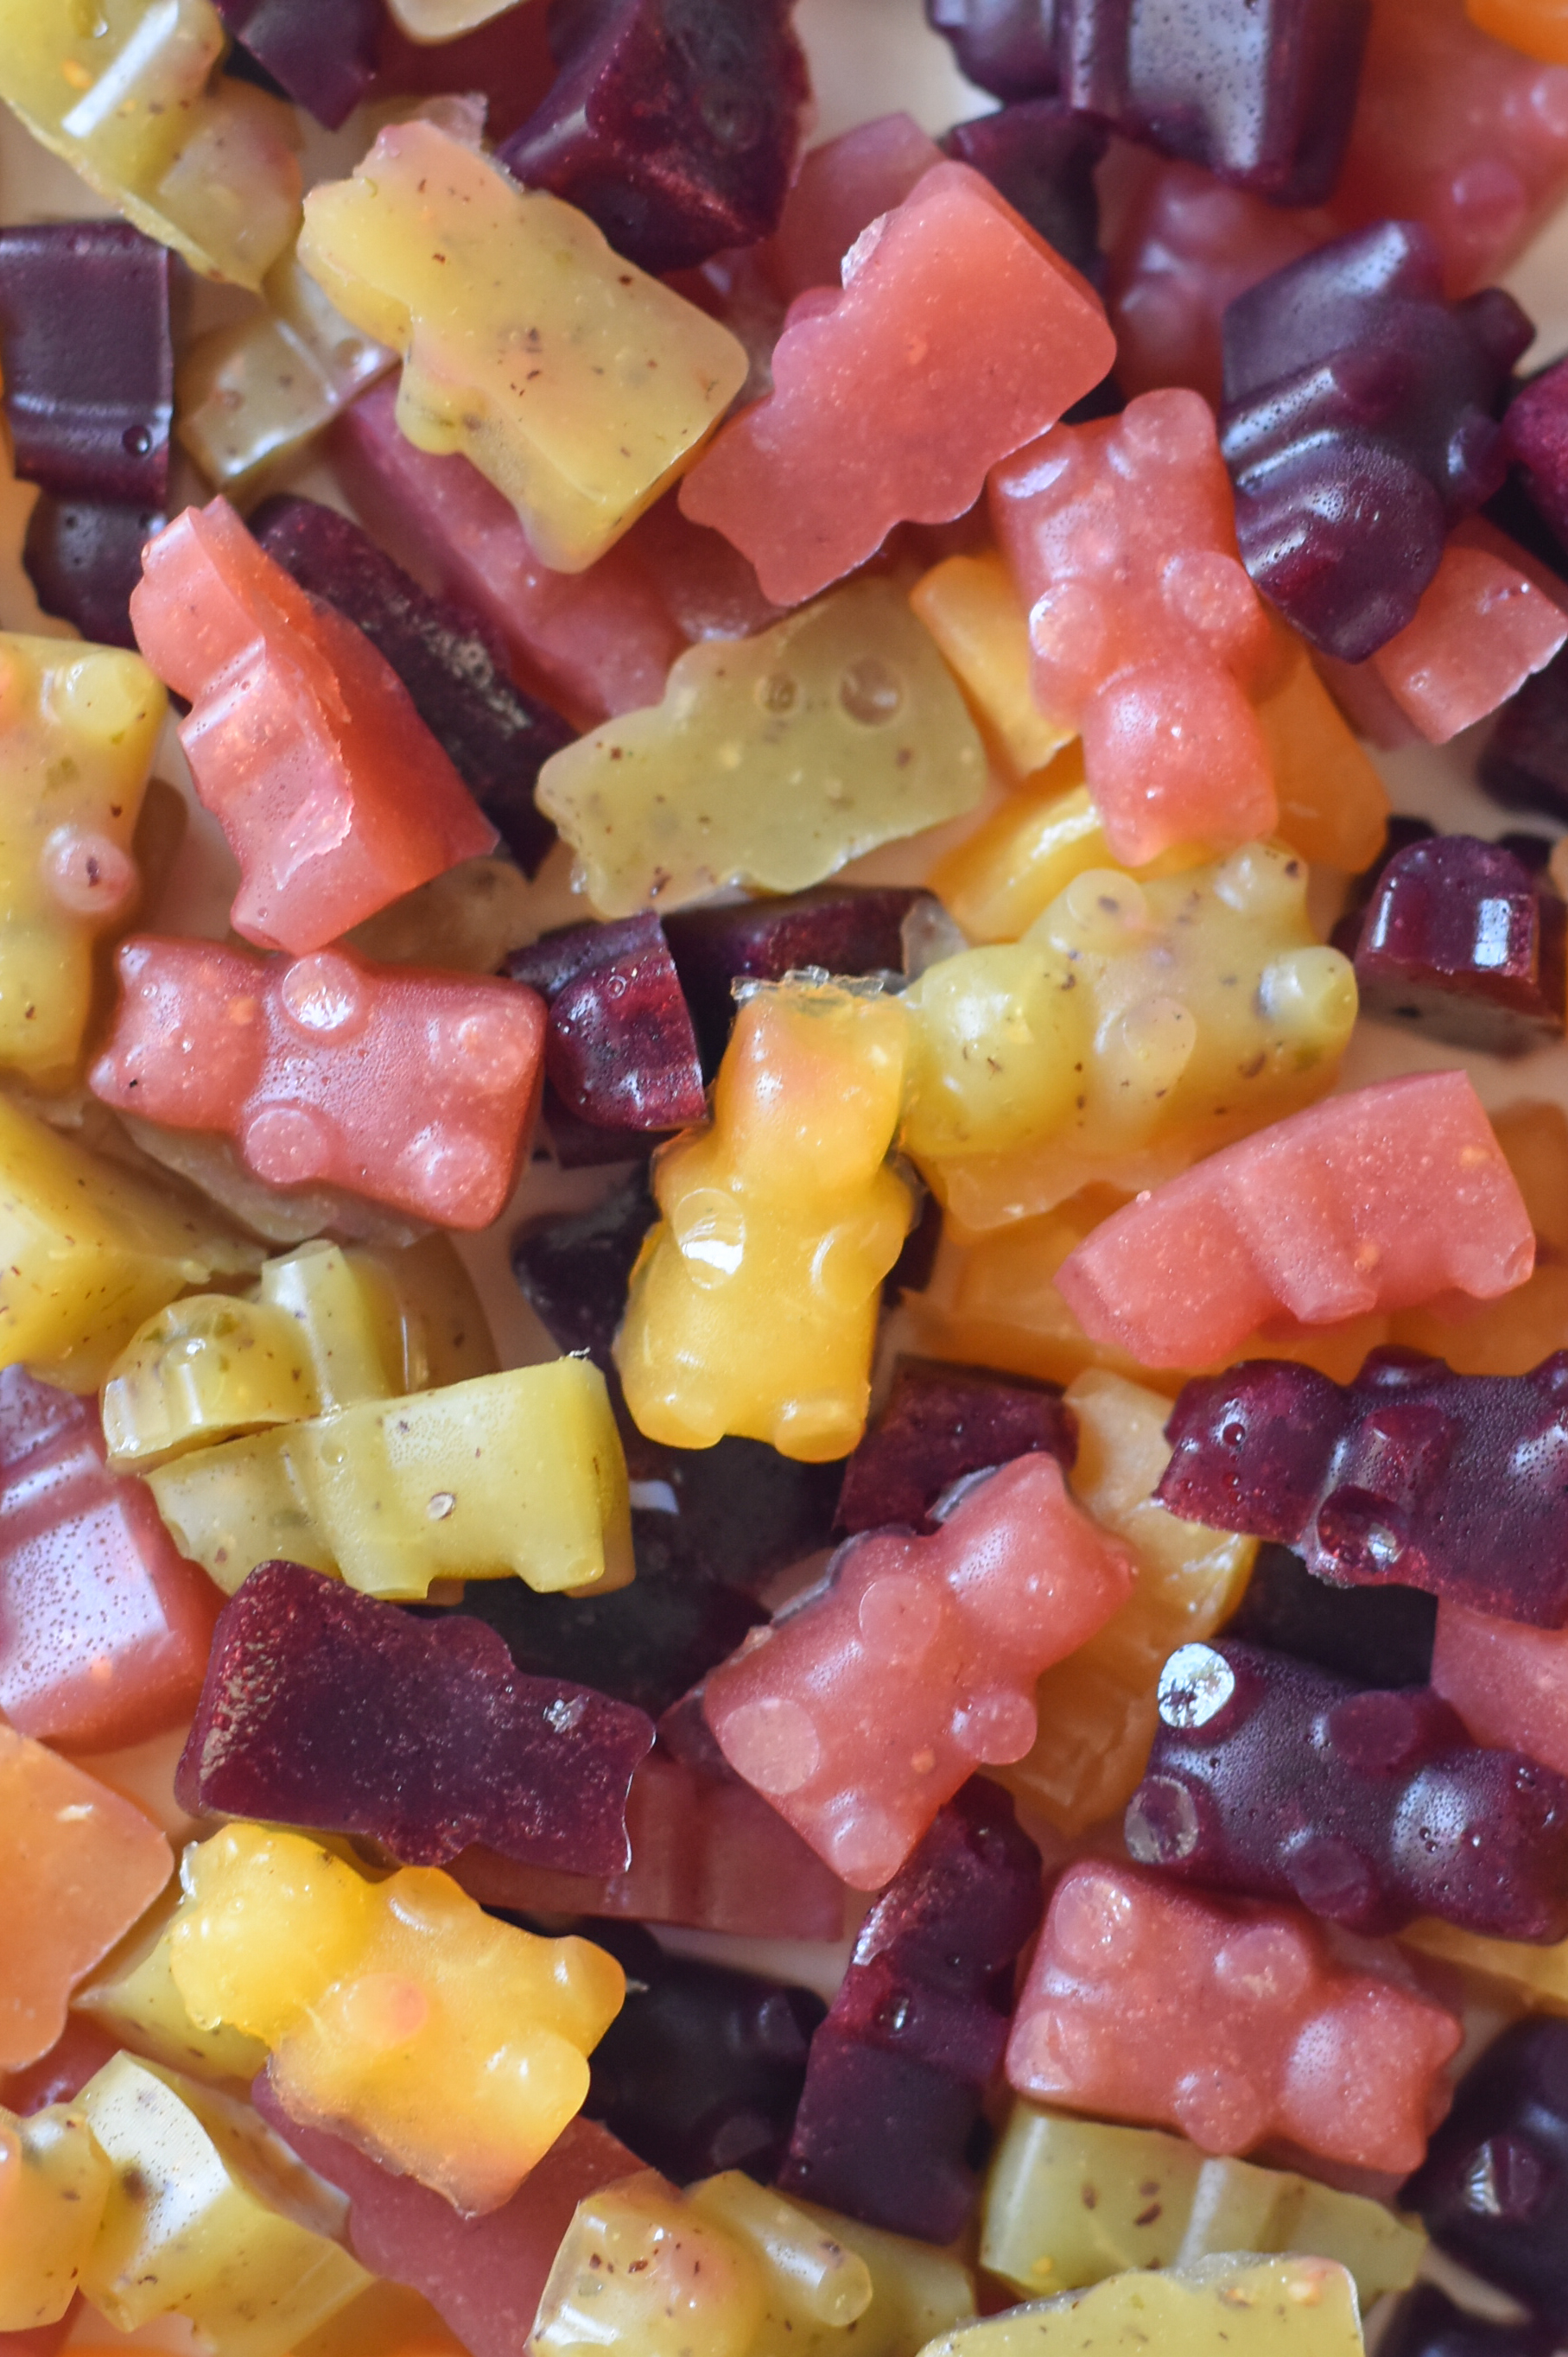 Homemade Fruit Snacks (with veggies!) - Unbound Wellness